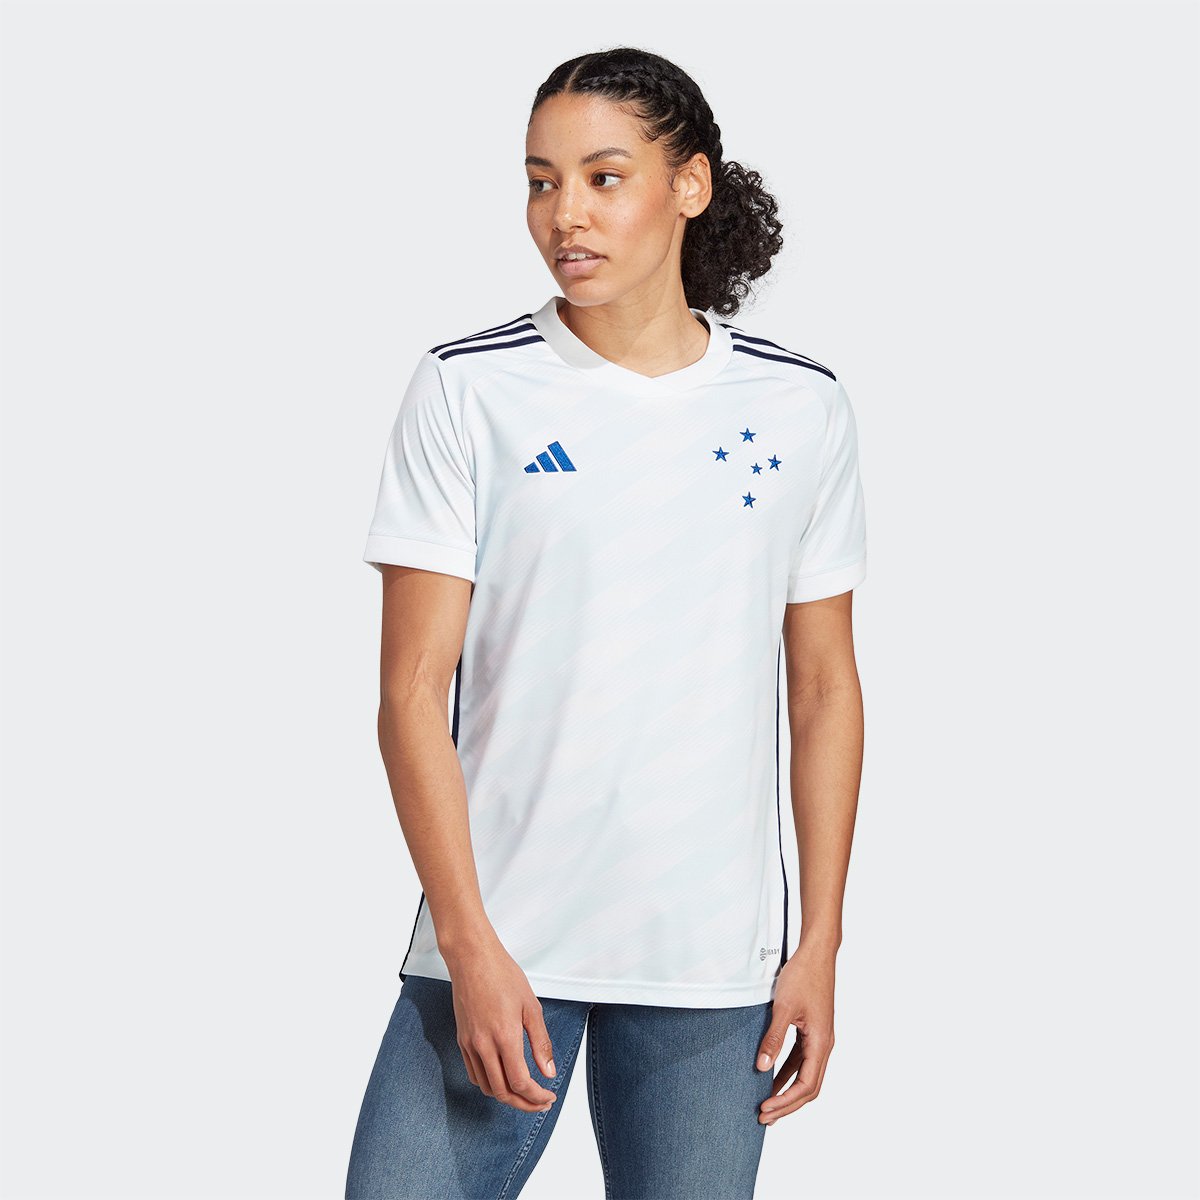 Camisa Cruzeiro II 23/24 s/n° Torcedor Adidas Feminina